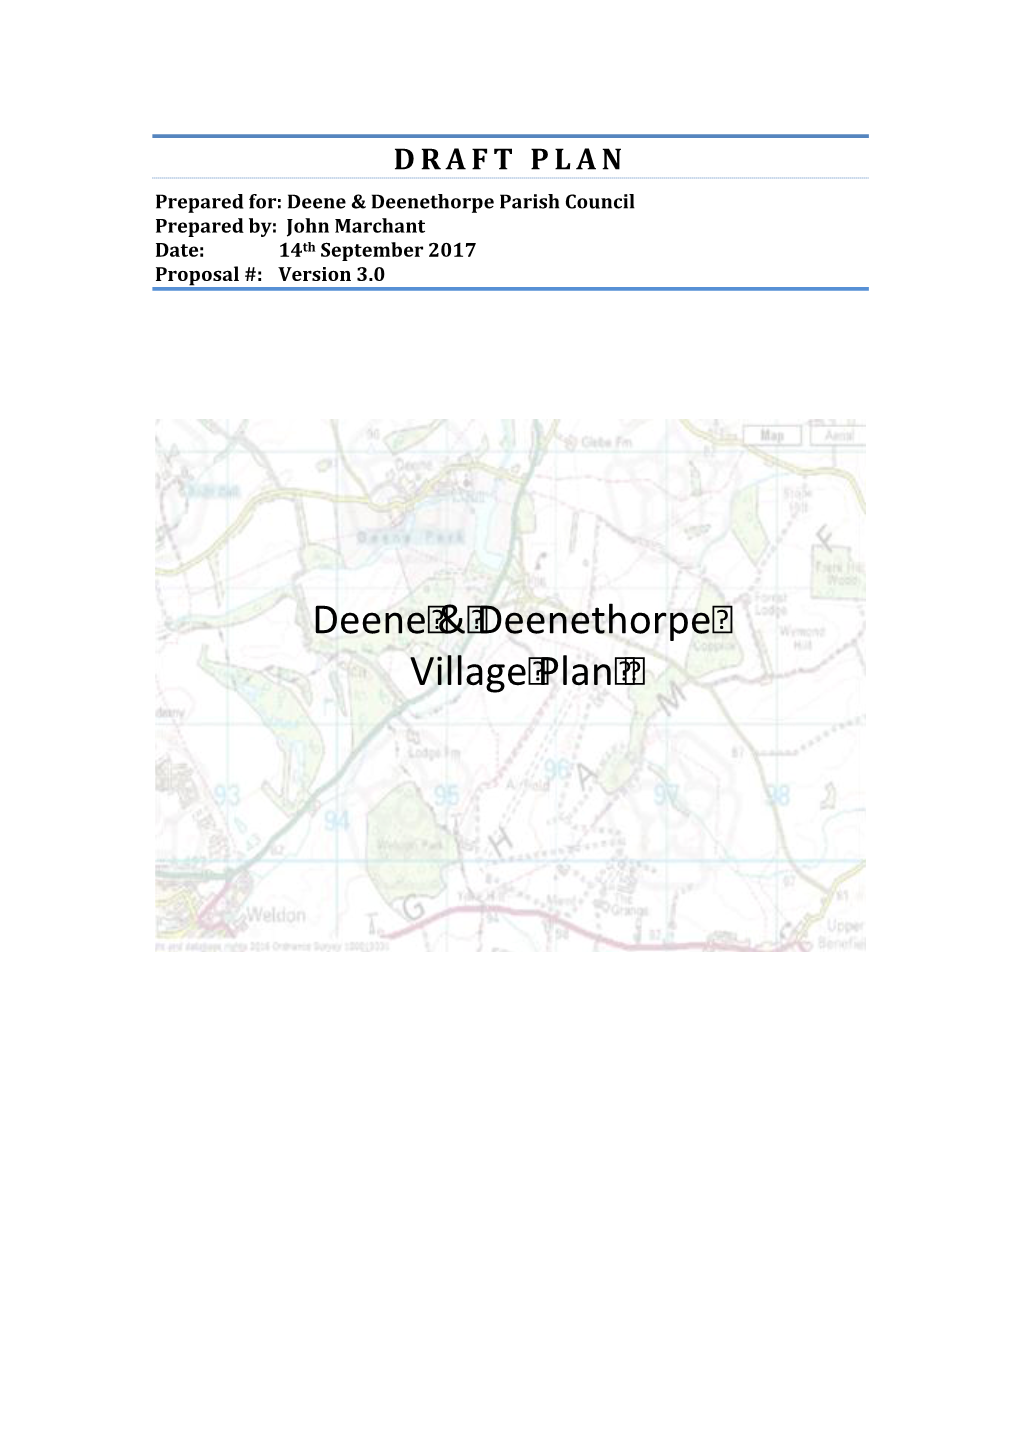 Deene & Deenethorpe Village Plan